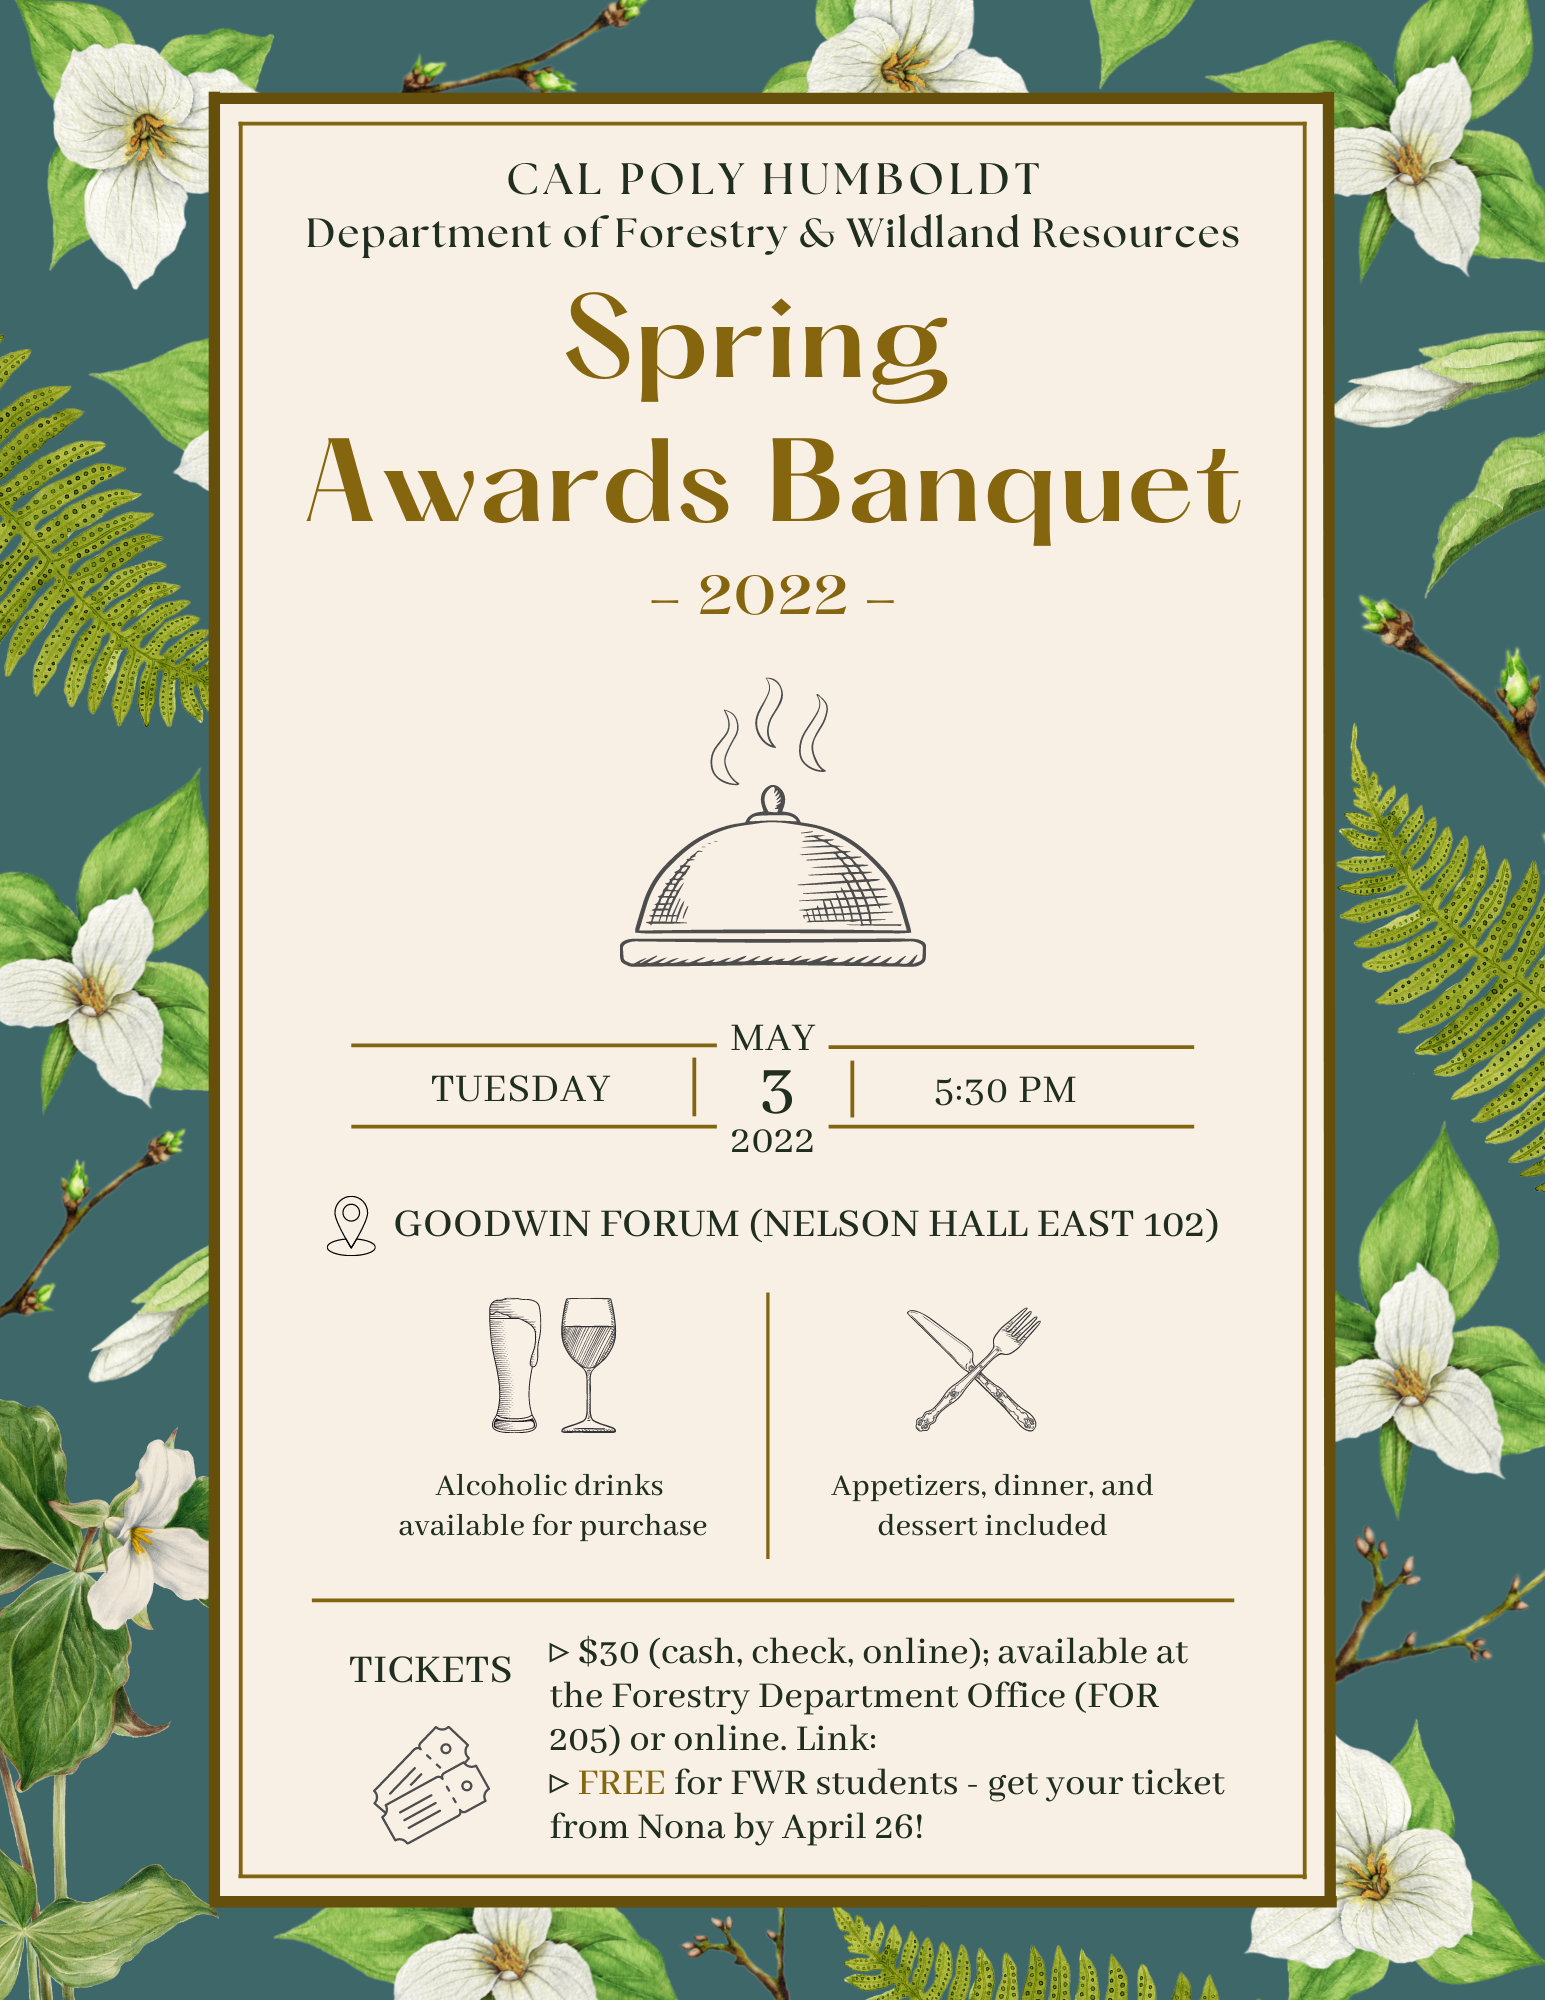 2022 Awards Banquet